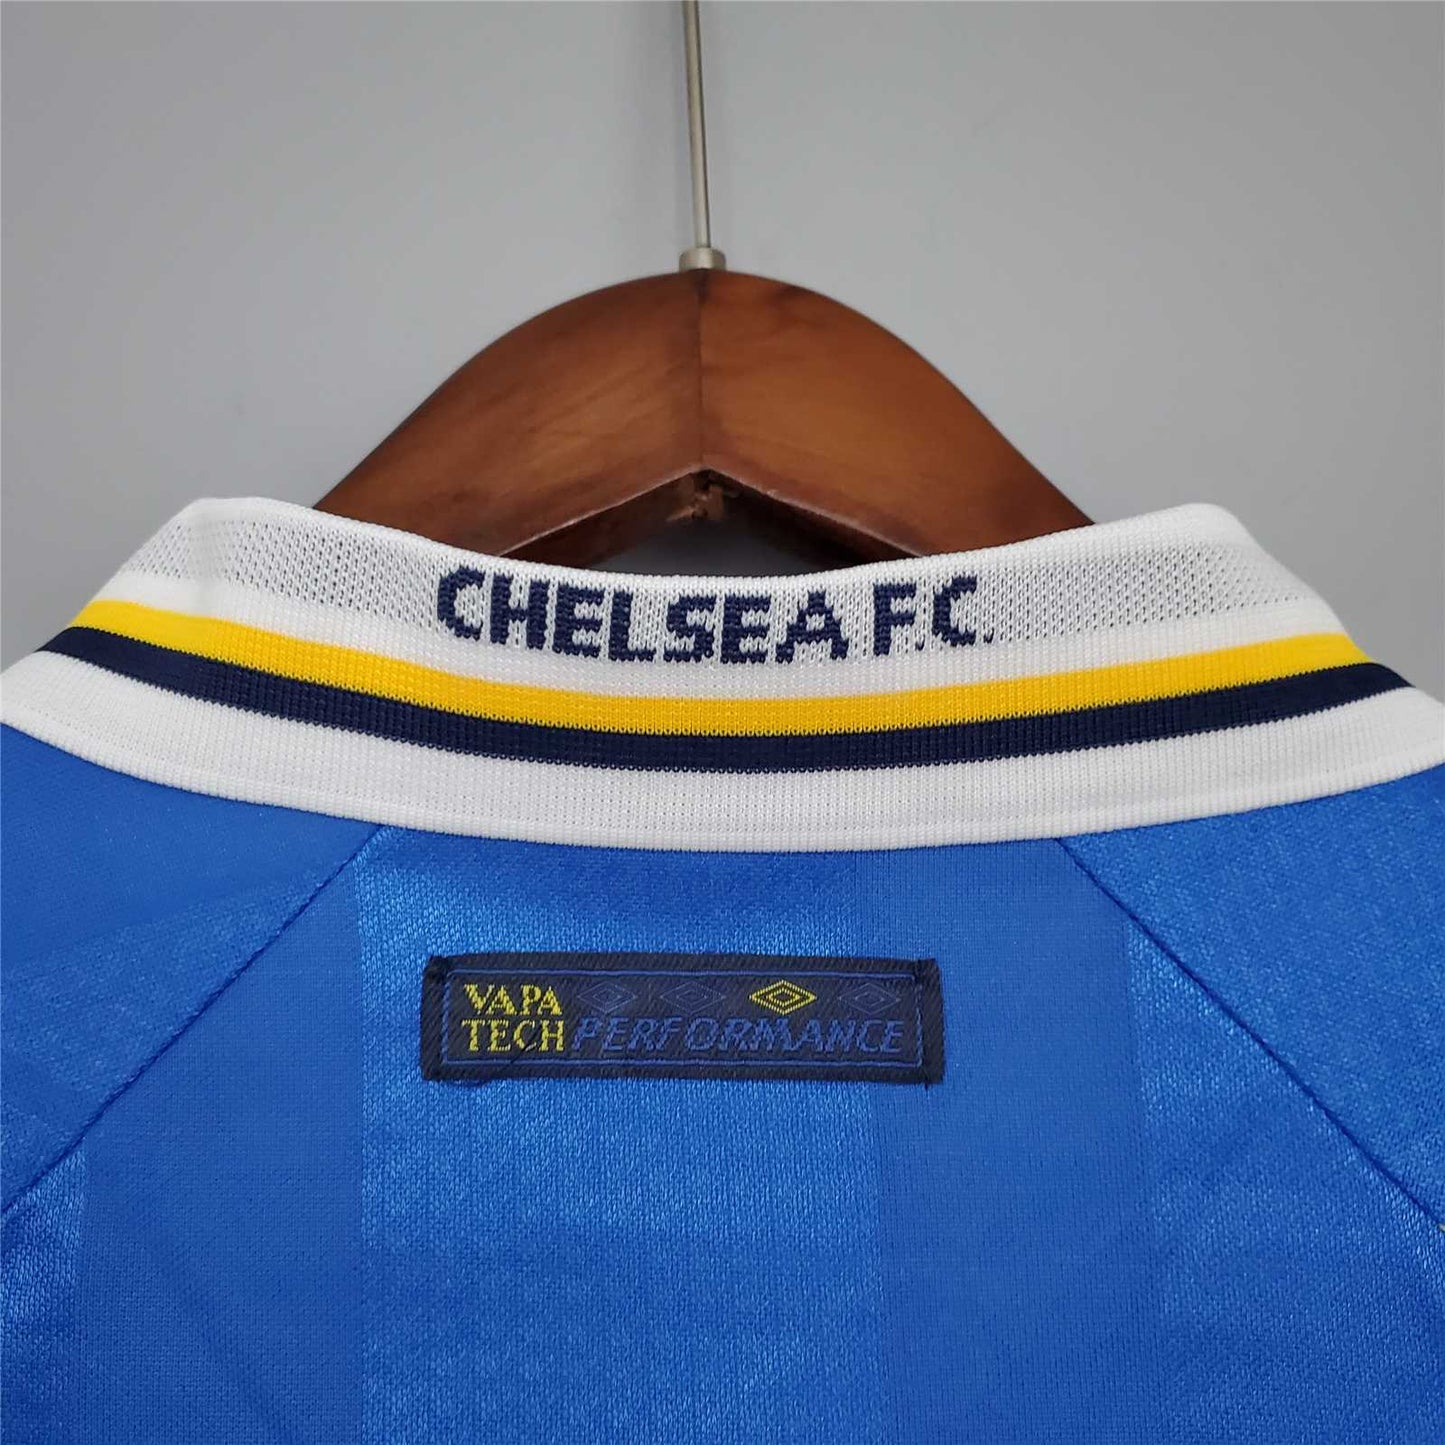 Chelsea FC 97-99 Home Shirt